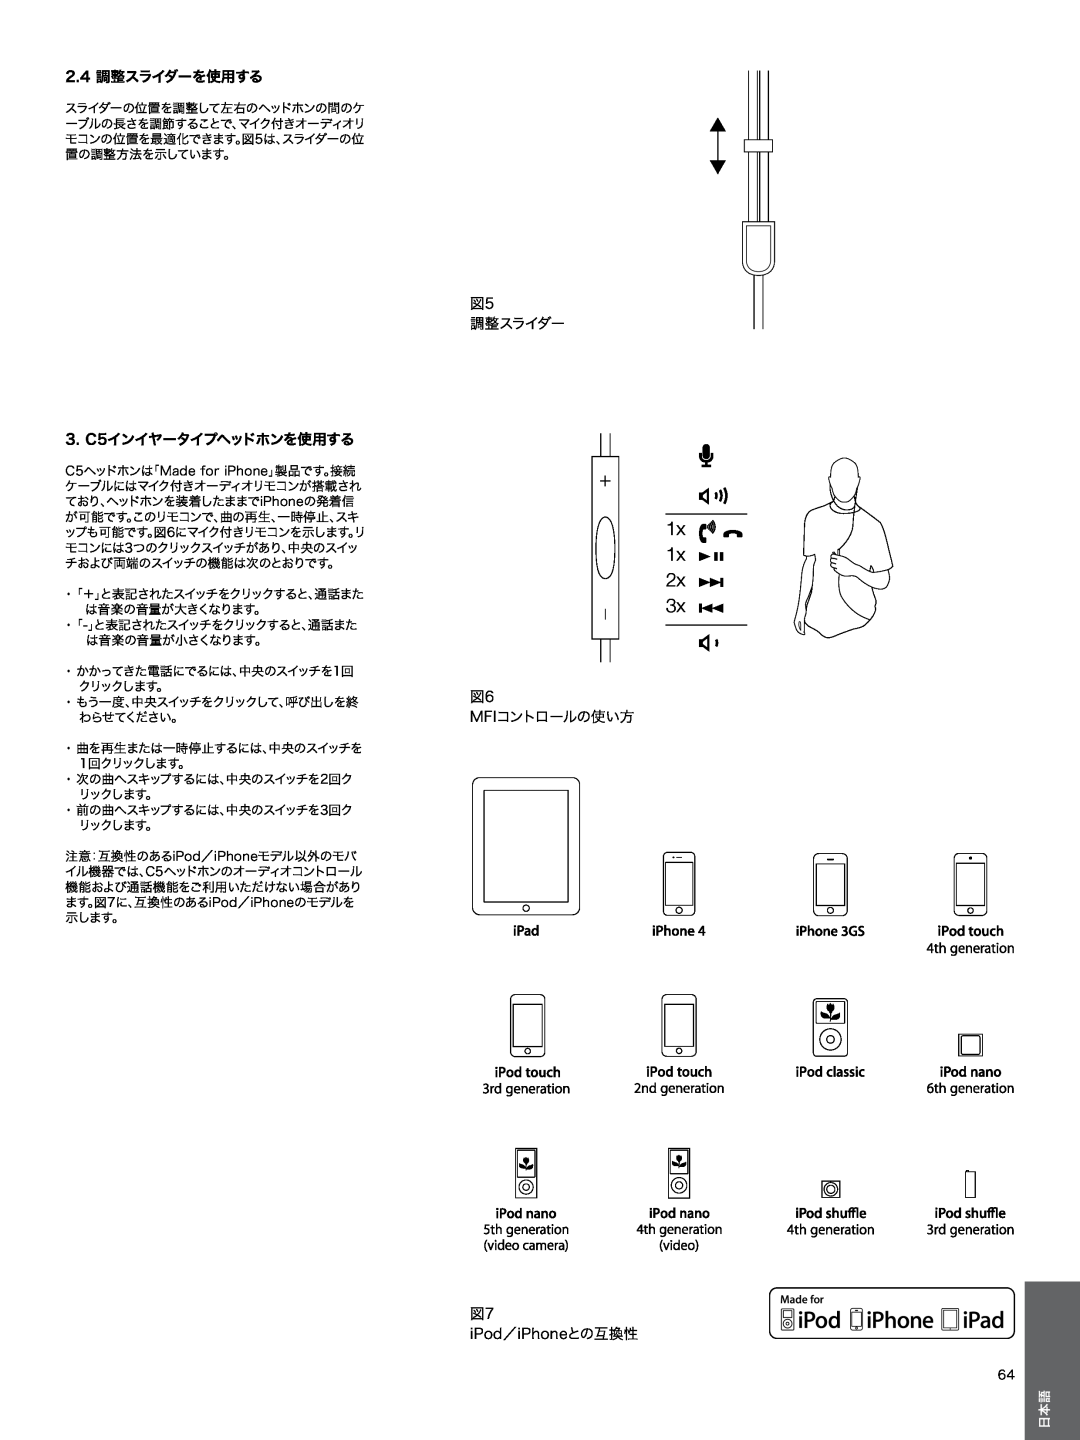 Bowers & Wilkins manual 1x, 2.4調整スライダーを使用する, 3.C5インイヤータイプヘッドホンを使用する, 図5 調整スライダー, 図6 MFIコントロールの使い方 図7, iPod／iPhoneとの互換性 